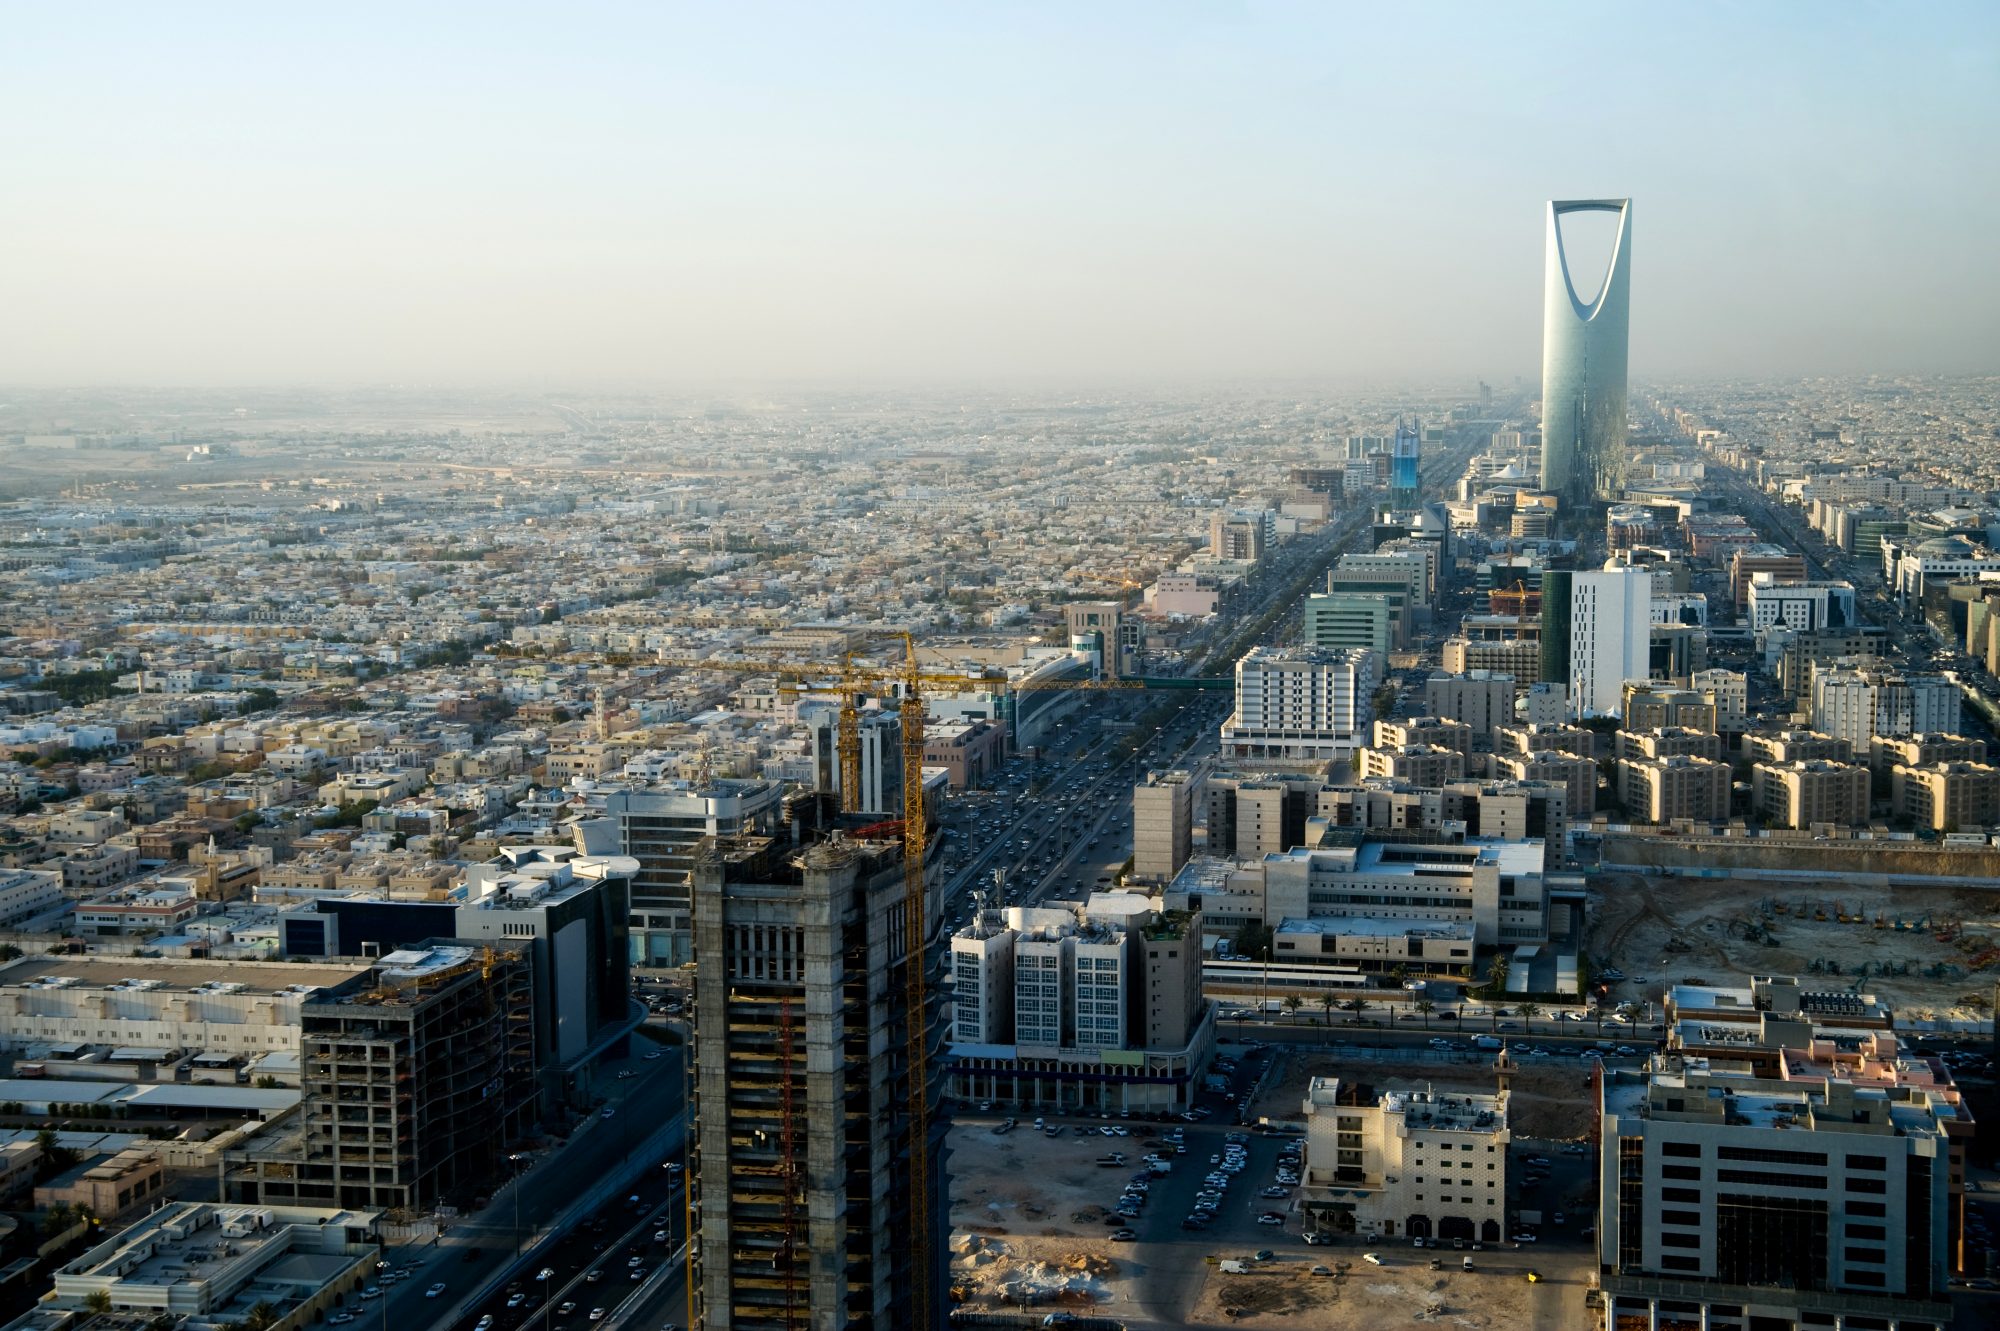 Asite to open new data center in the Kingdom of Saudi Arabia